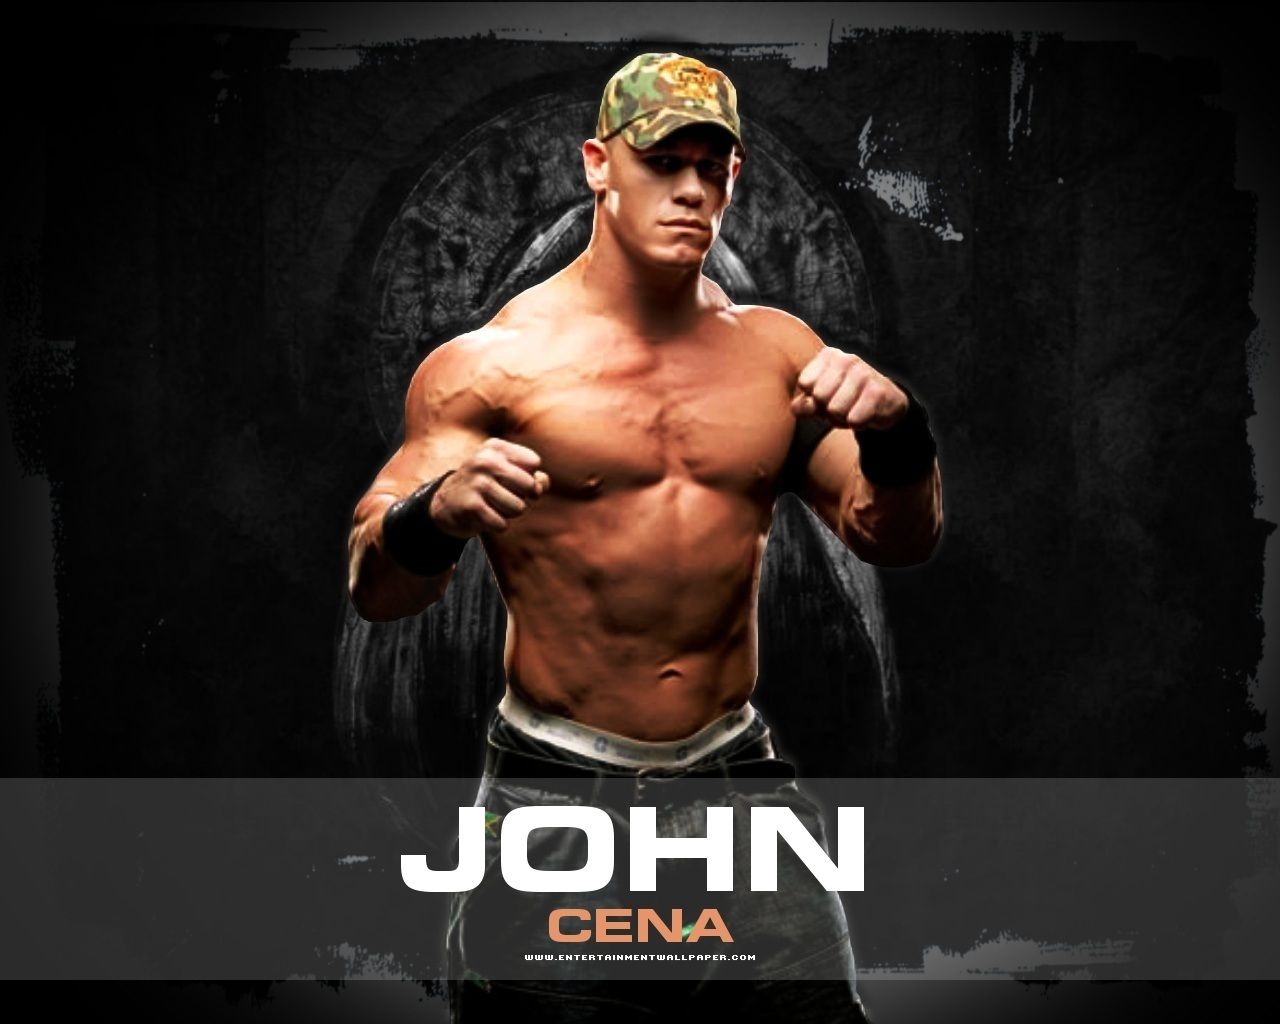 John Cena - John Cena Wallpaper (2116150) - Fanpop